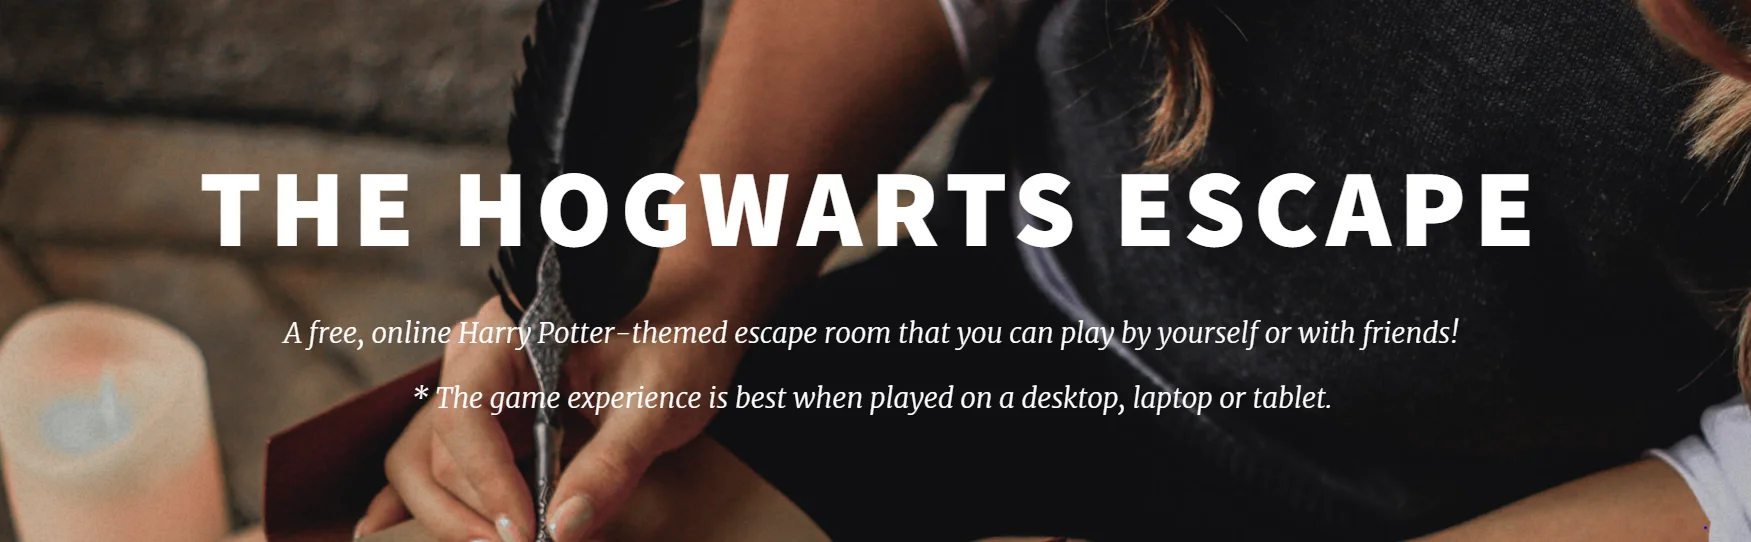 Hogwarts escape room puzzles online home page